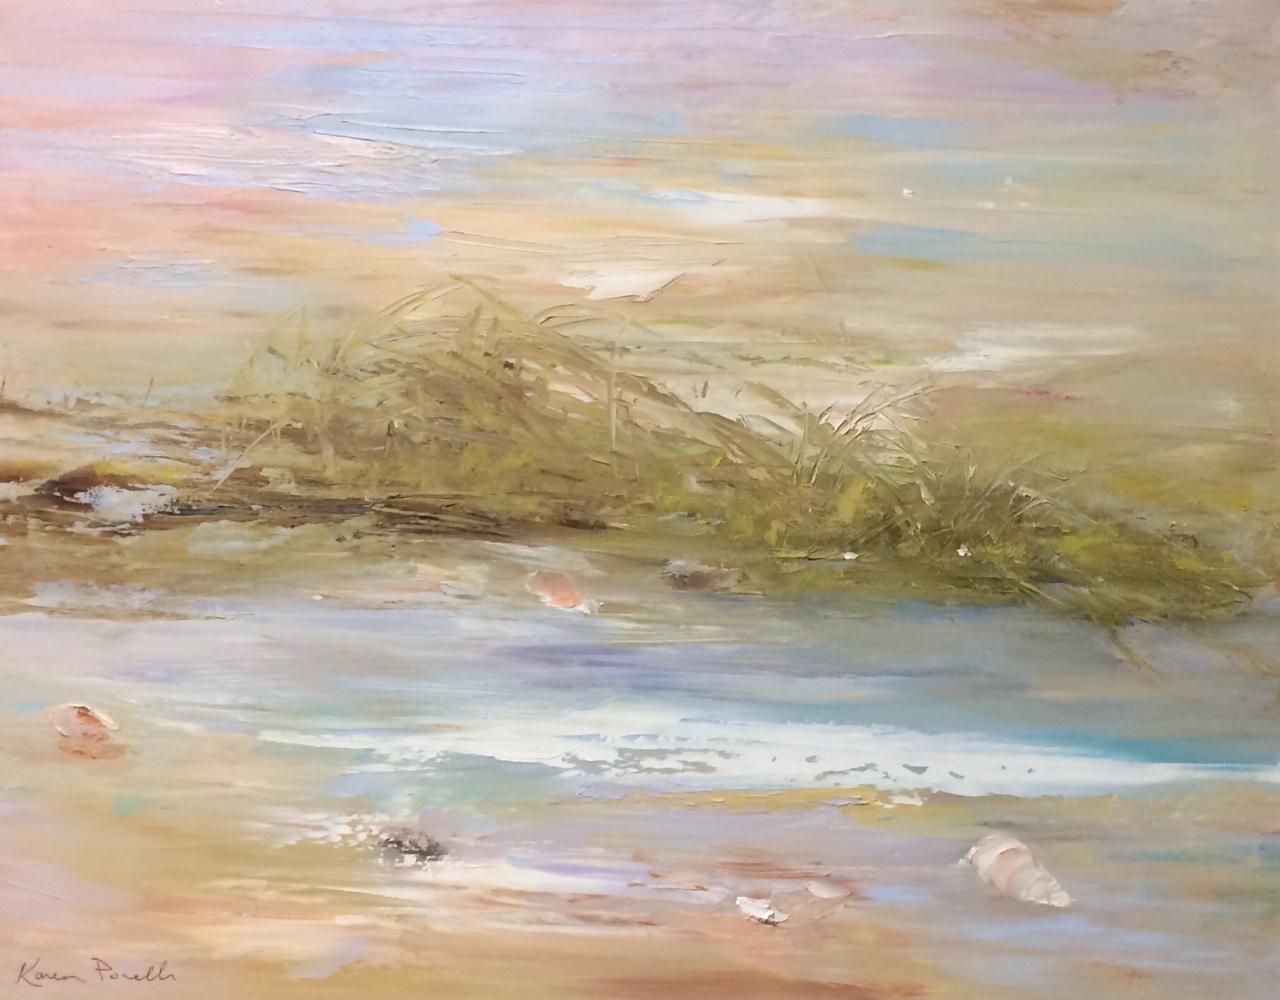 Sun Washed Seashells, original 24x30 abstract expressionist marine landscape - Abstract Expressionist Painting by Karen Ponelli